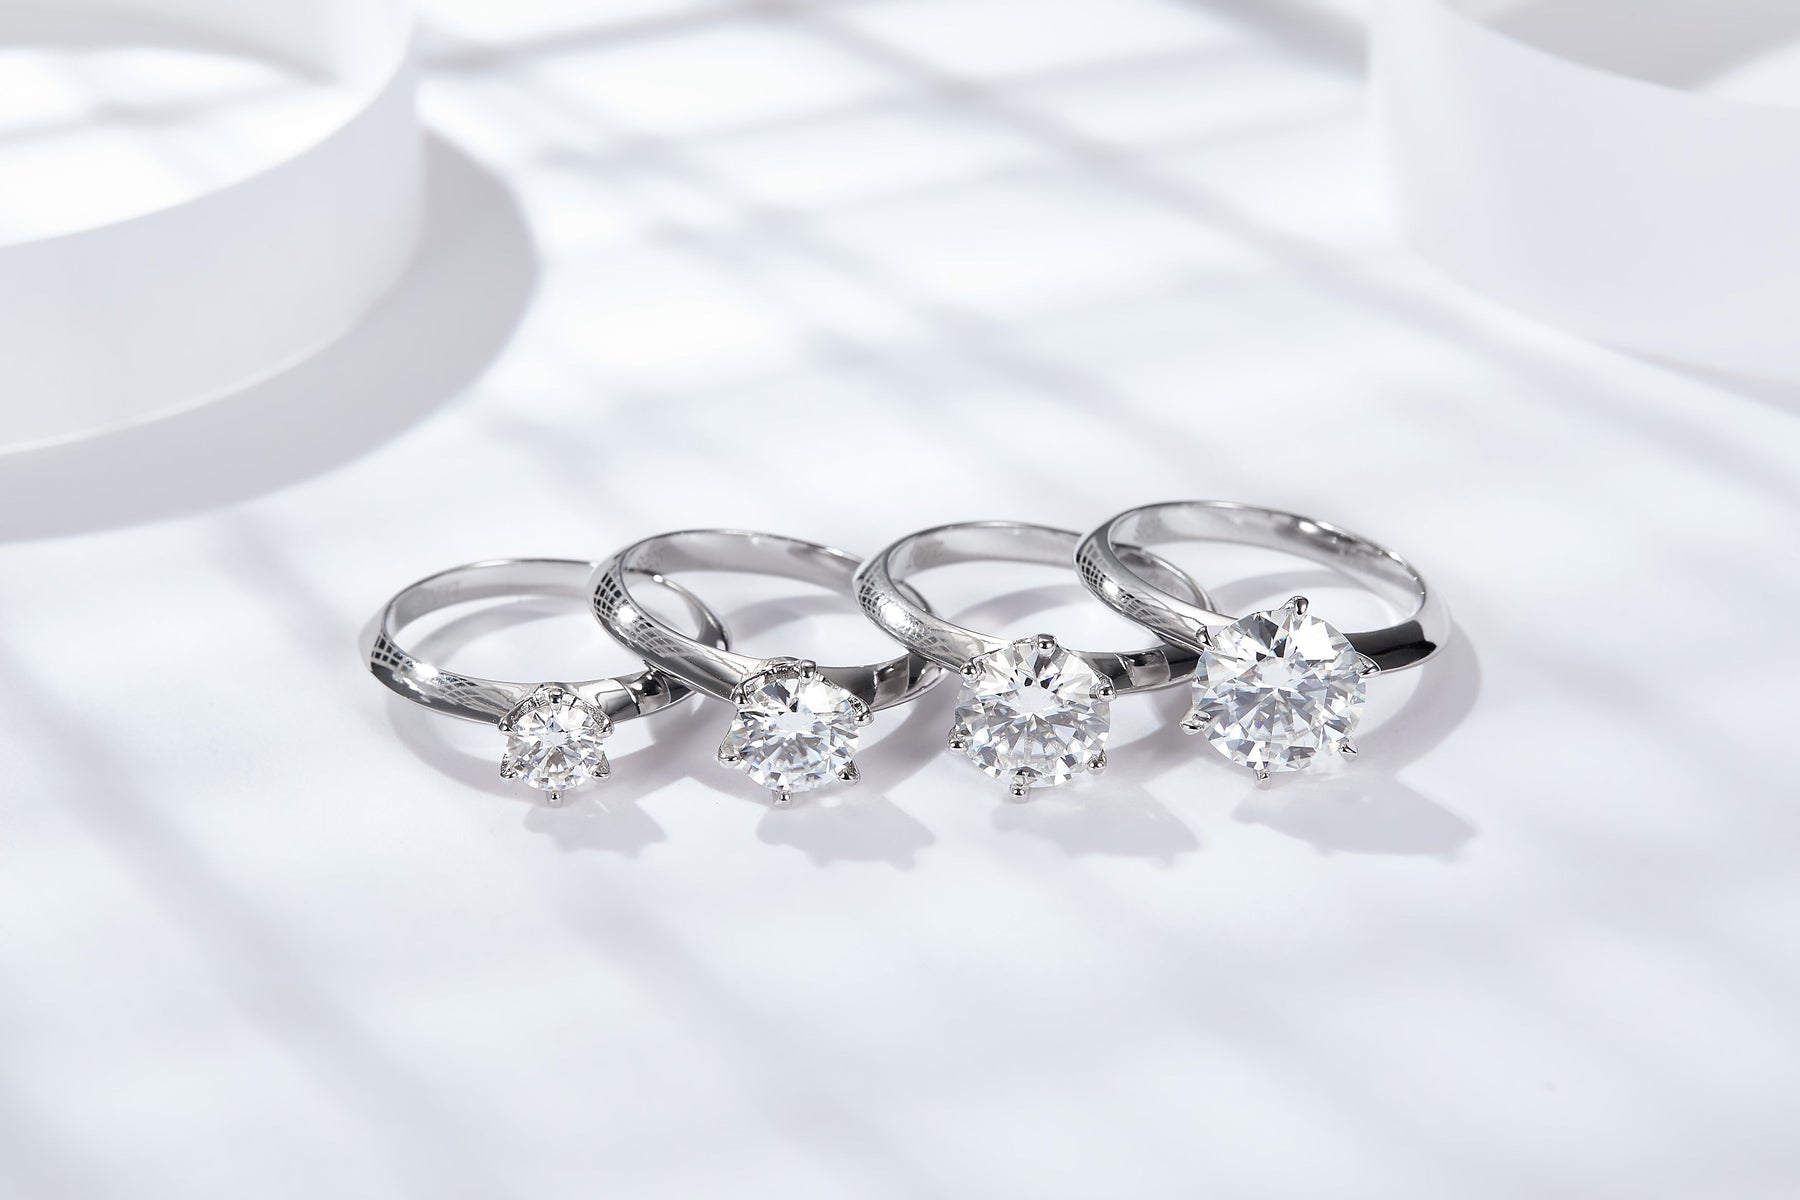 Classic Six-prong S925 Silver Moissanite Diamond Ring